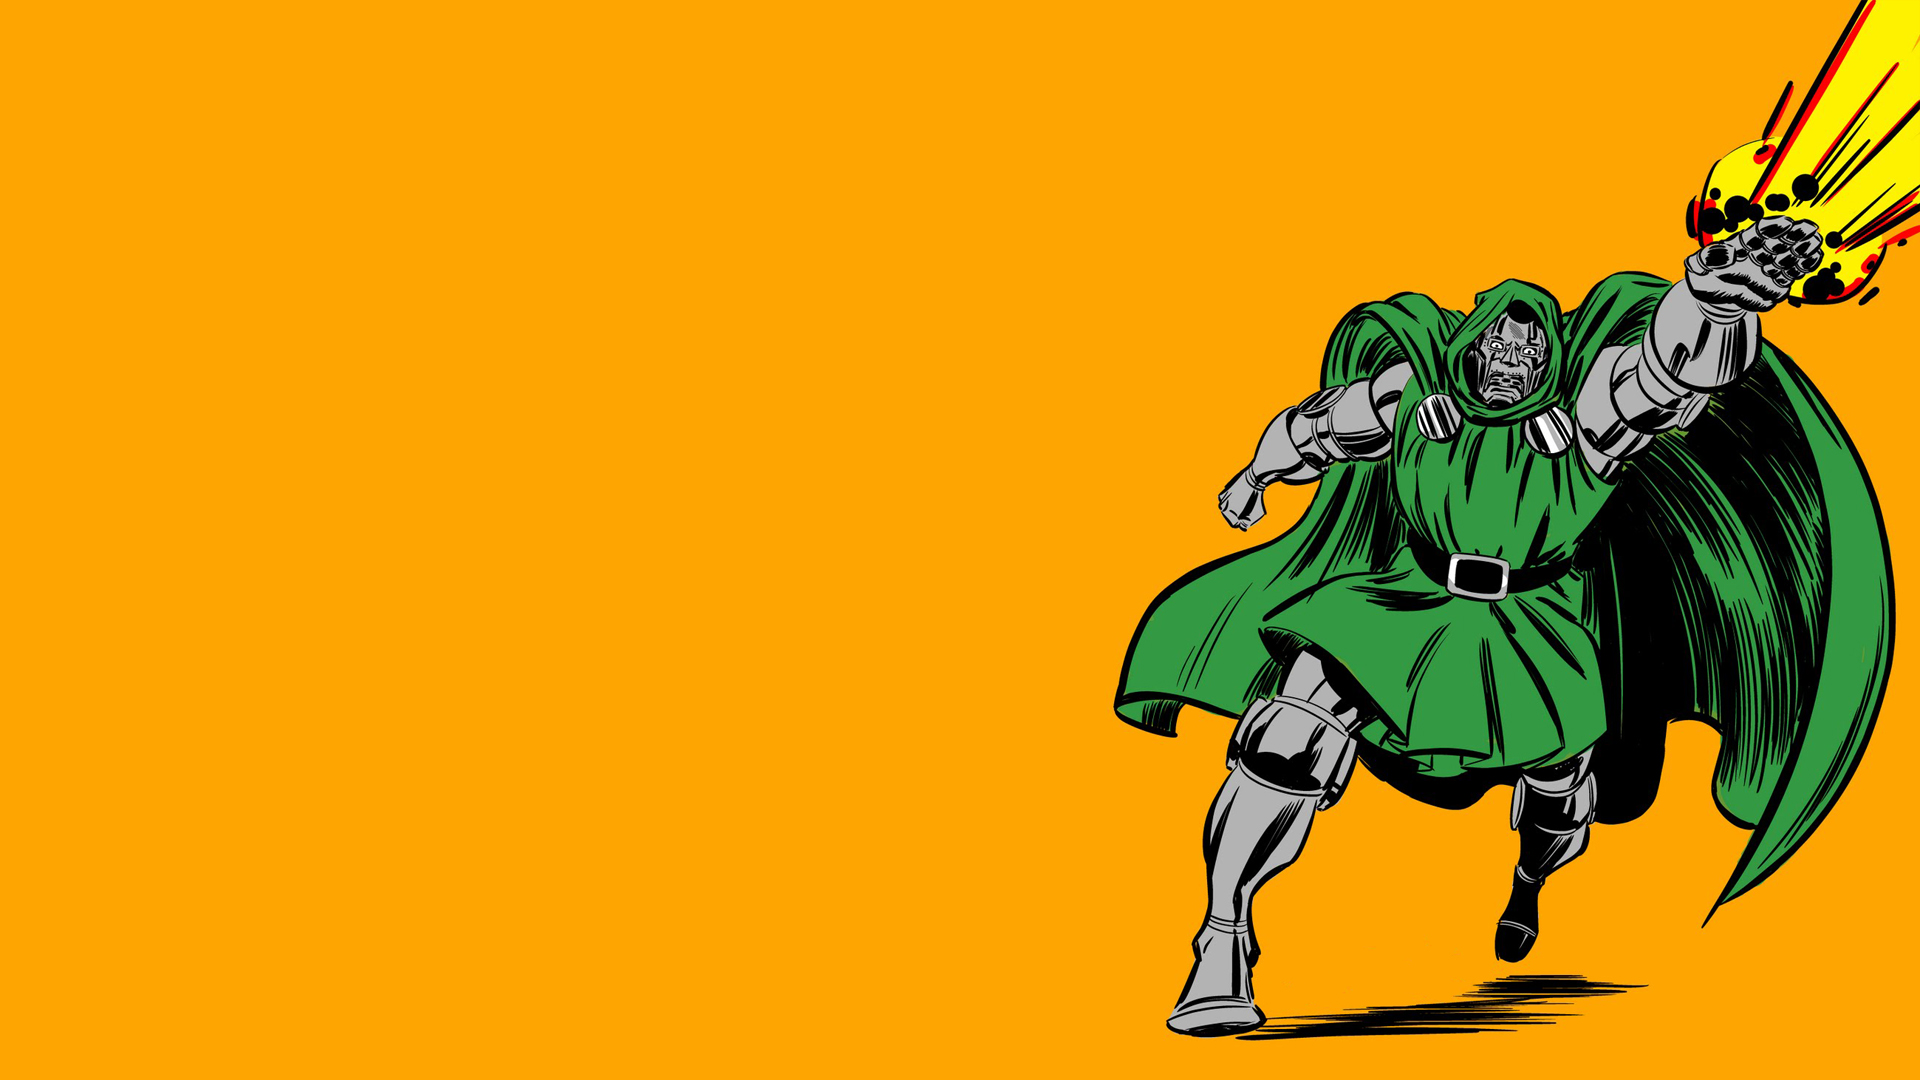 doctor doom wallpaper,green,cartoon,yellow,fictional character,illustration